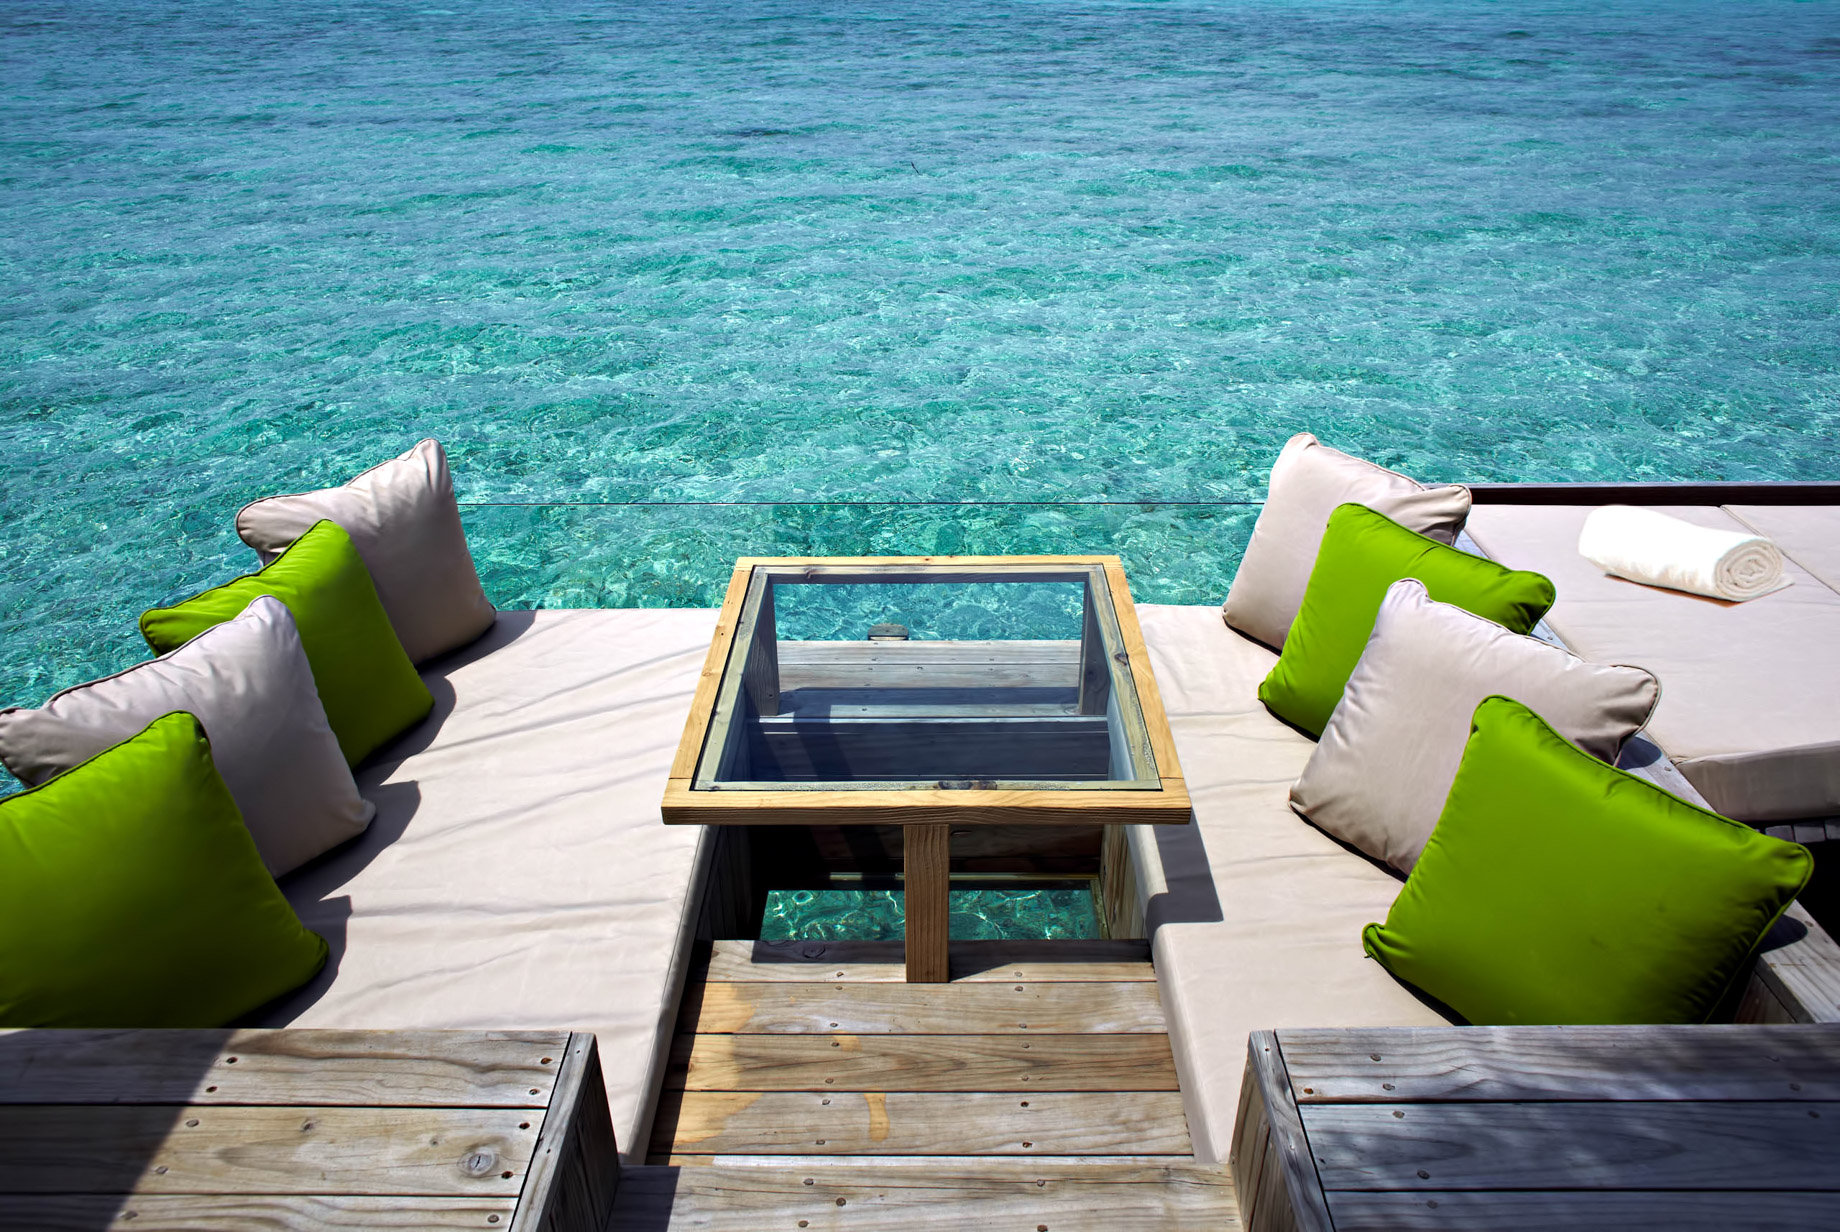 Six Senses Laamu Resort - Laamu Atoll, Maldives - Overwater Villa Ocean Deck